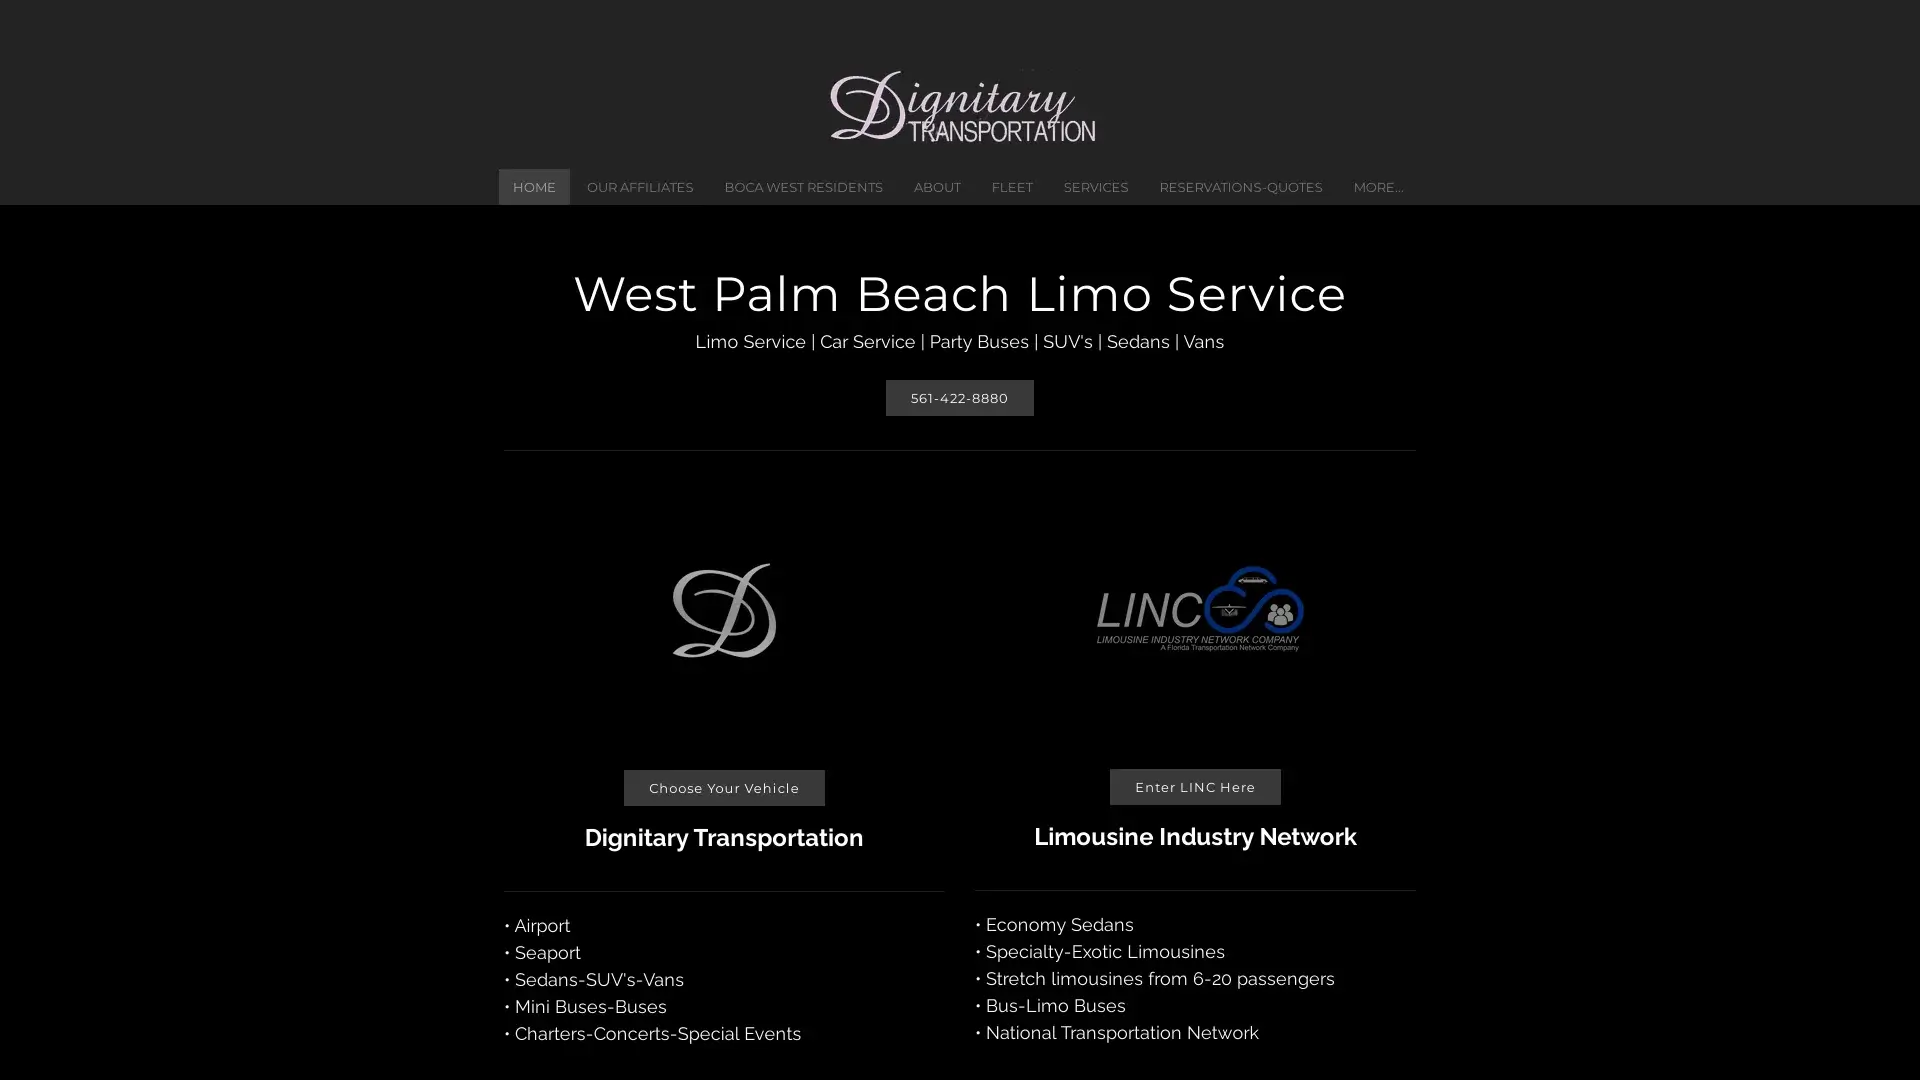 Limo Service - Car Service - Limousine Rental - West Palm Beach, FL